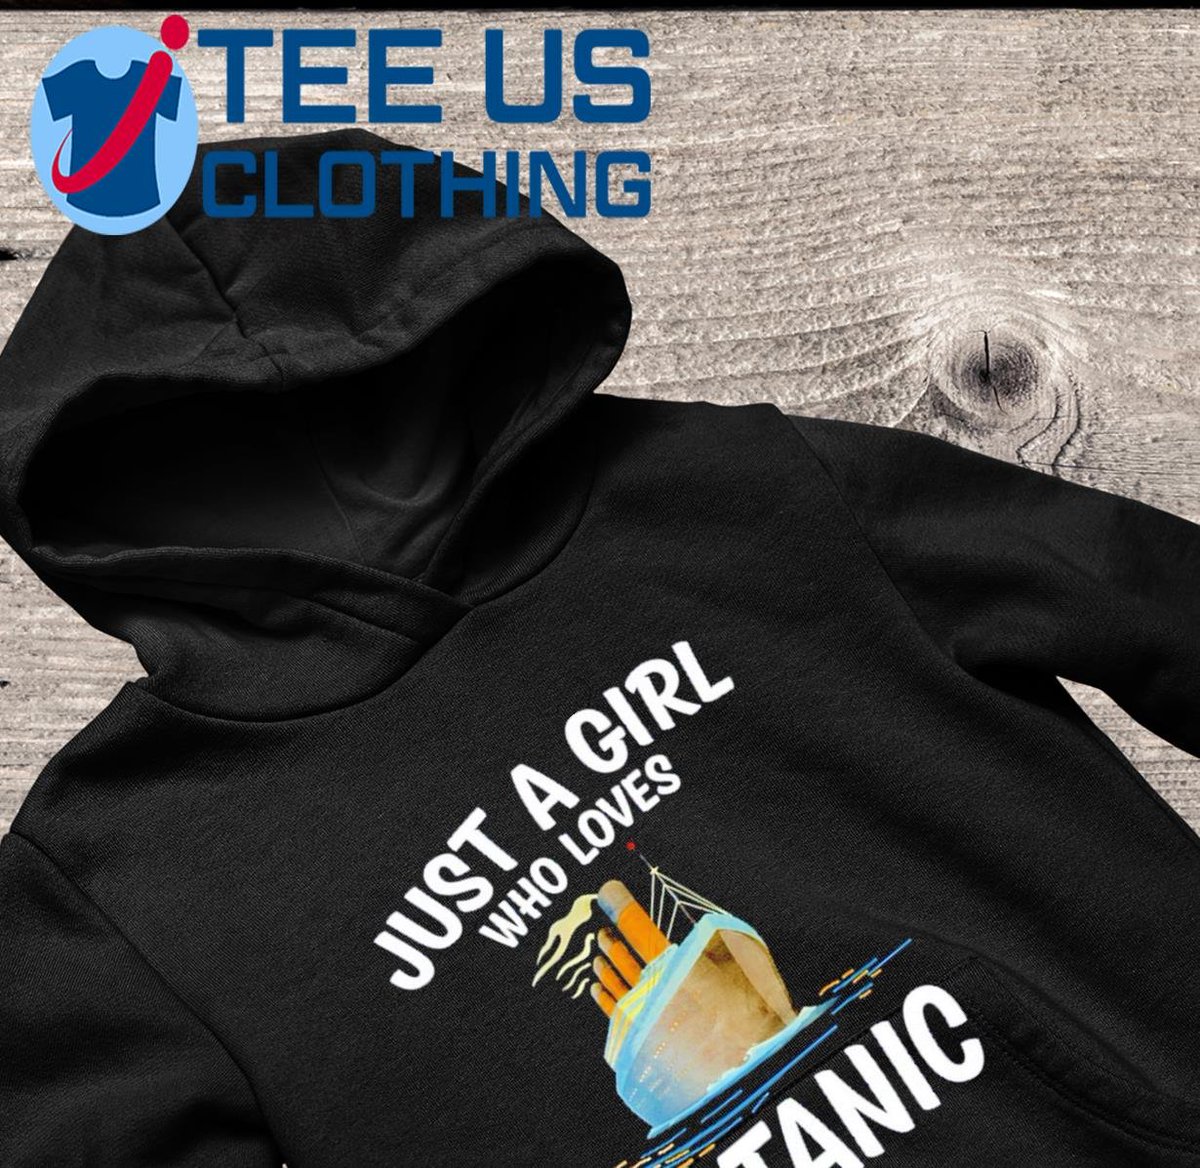 Just A Girl Who Loves Titanic Stream Generation Loss Shirt

Buy this shirt: teeusclothing.com/product/just-a…
Home:  teeusclothing.com

#titanicsubmarine #titanicsub #titanic #bbcqt #Titanic #GlobalWarming #SystemChange #Netzfund